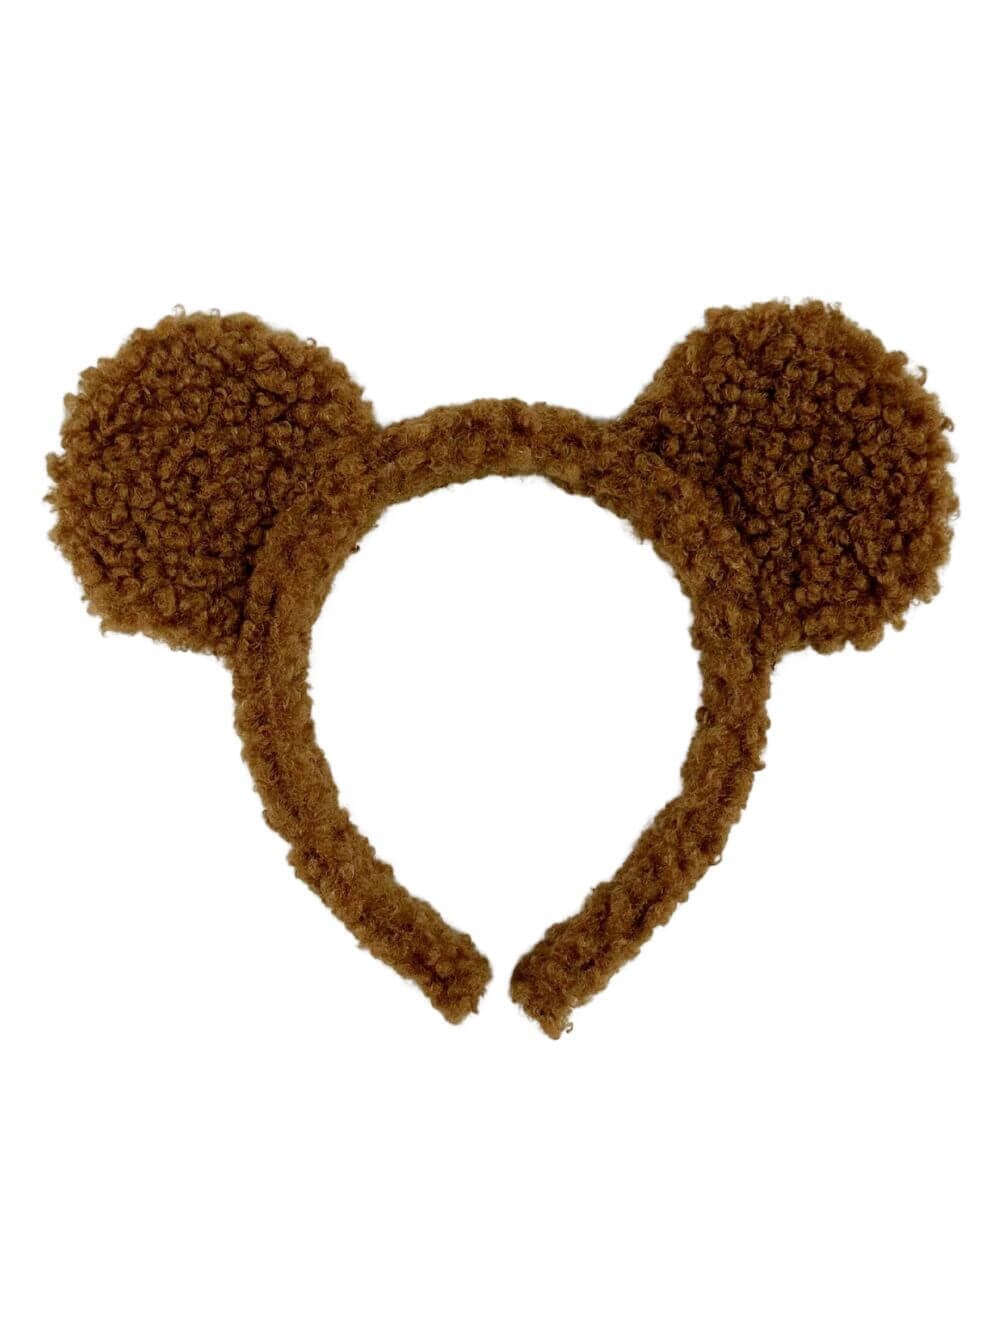 Brown Bear Girls Headband Ears, Kid or Adult Size Costume Accessories - Sydney So Sweet